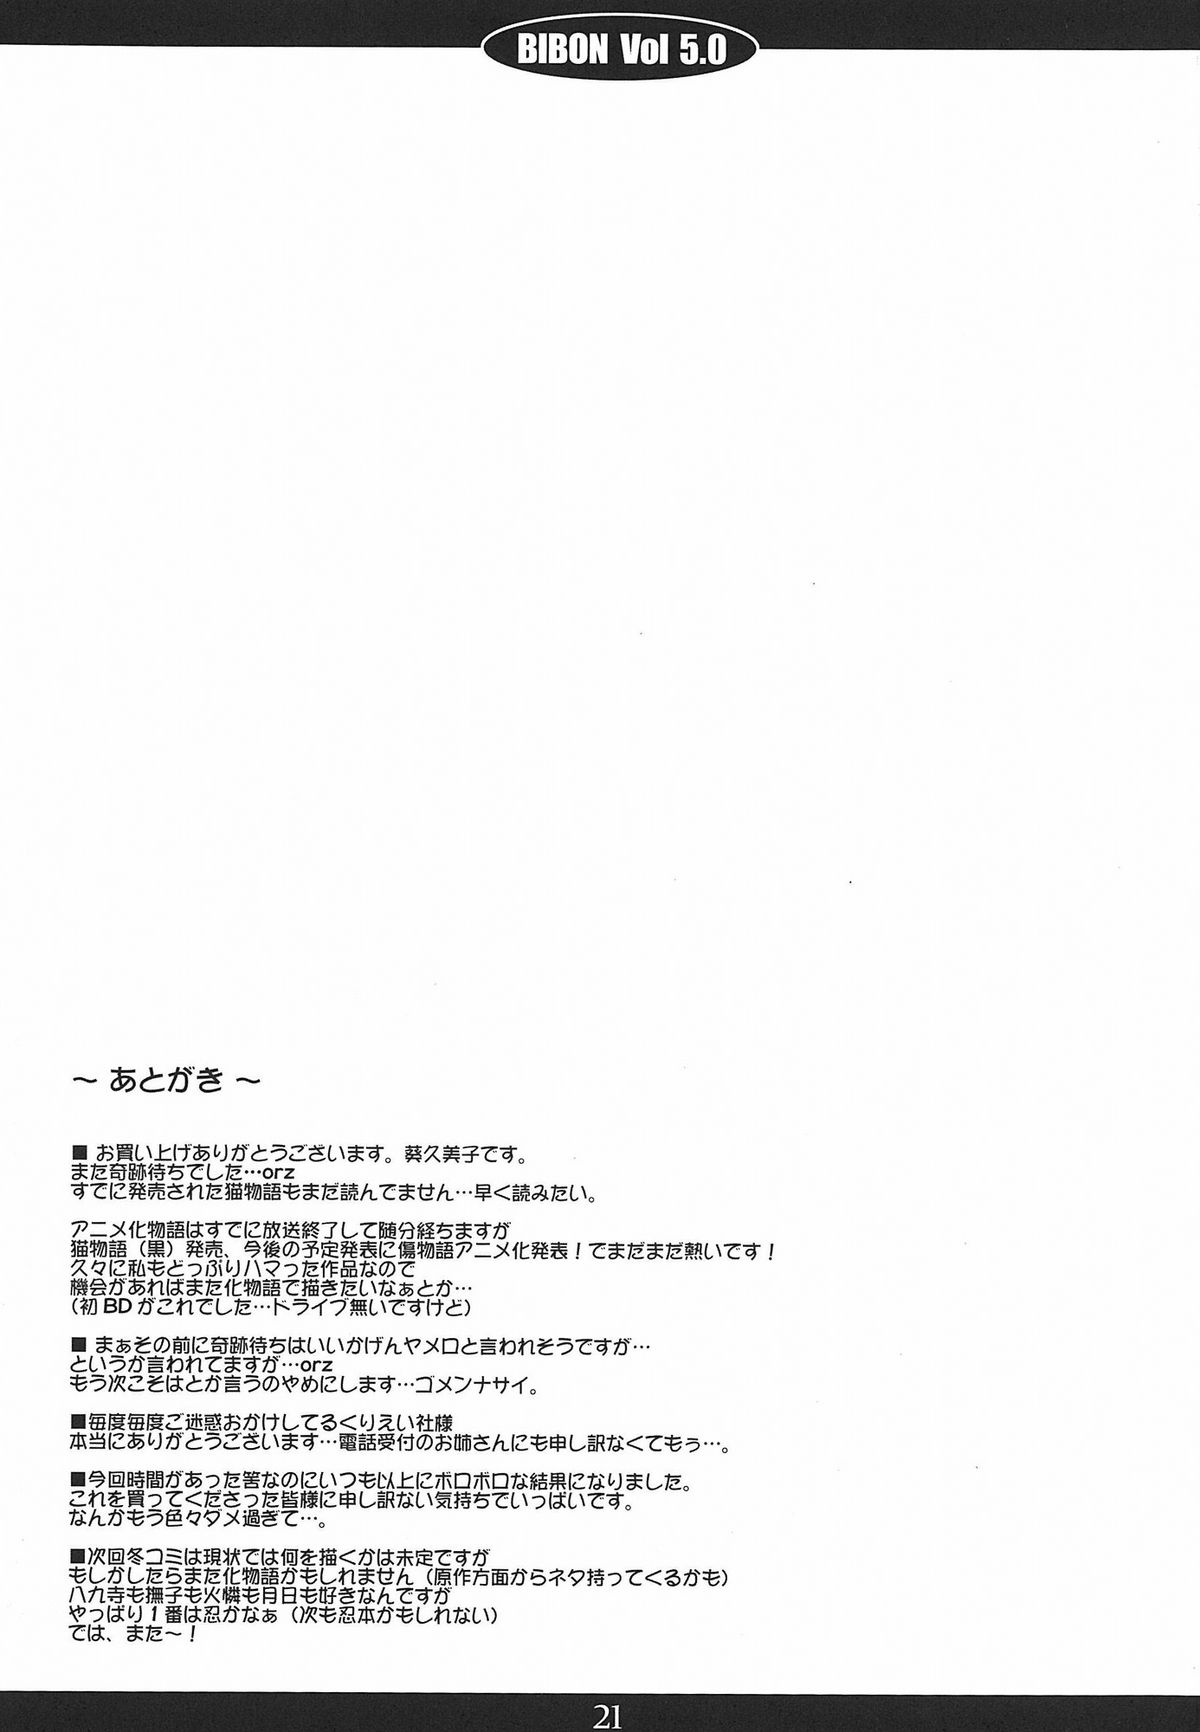 (C78) [CHILLED HOUSE (葵久美子)] BIBON VOL 5.0 (化物語)